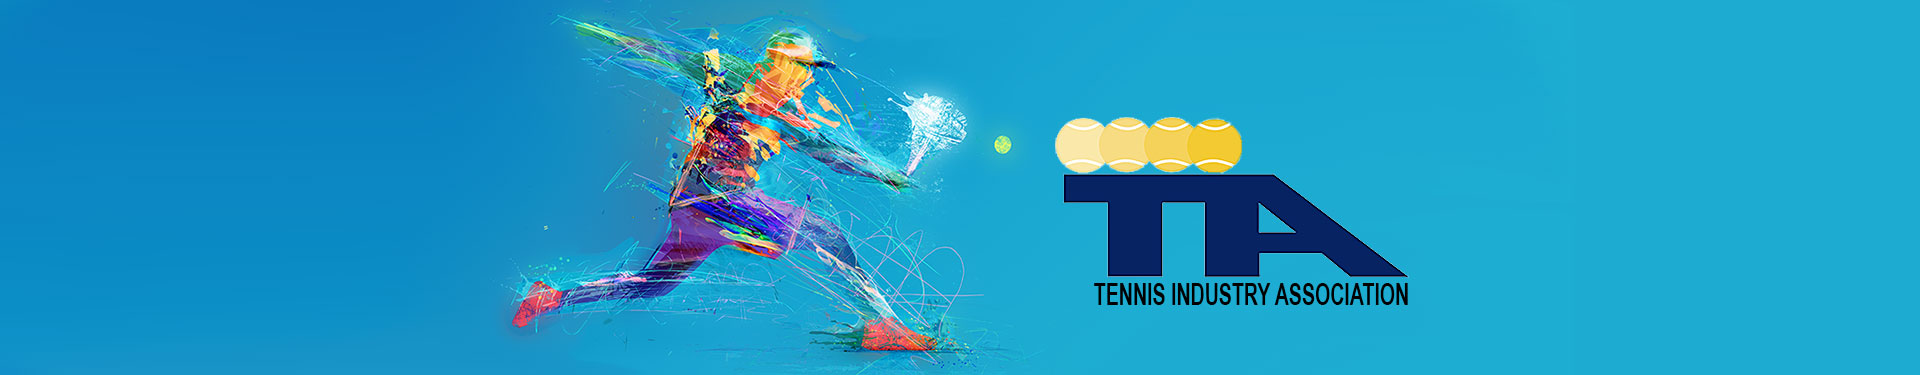 TIA Tennis Industry Association